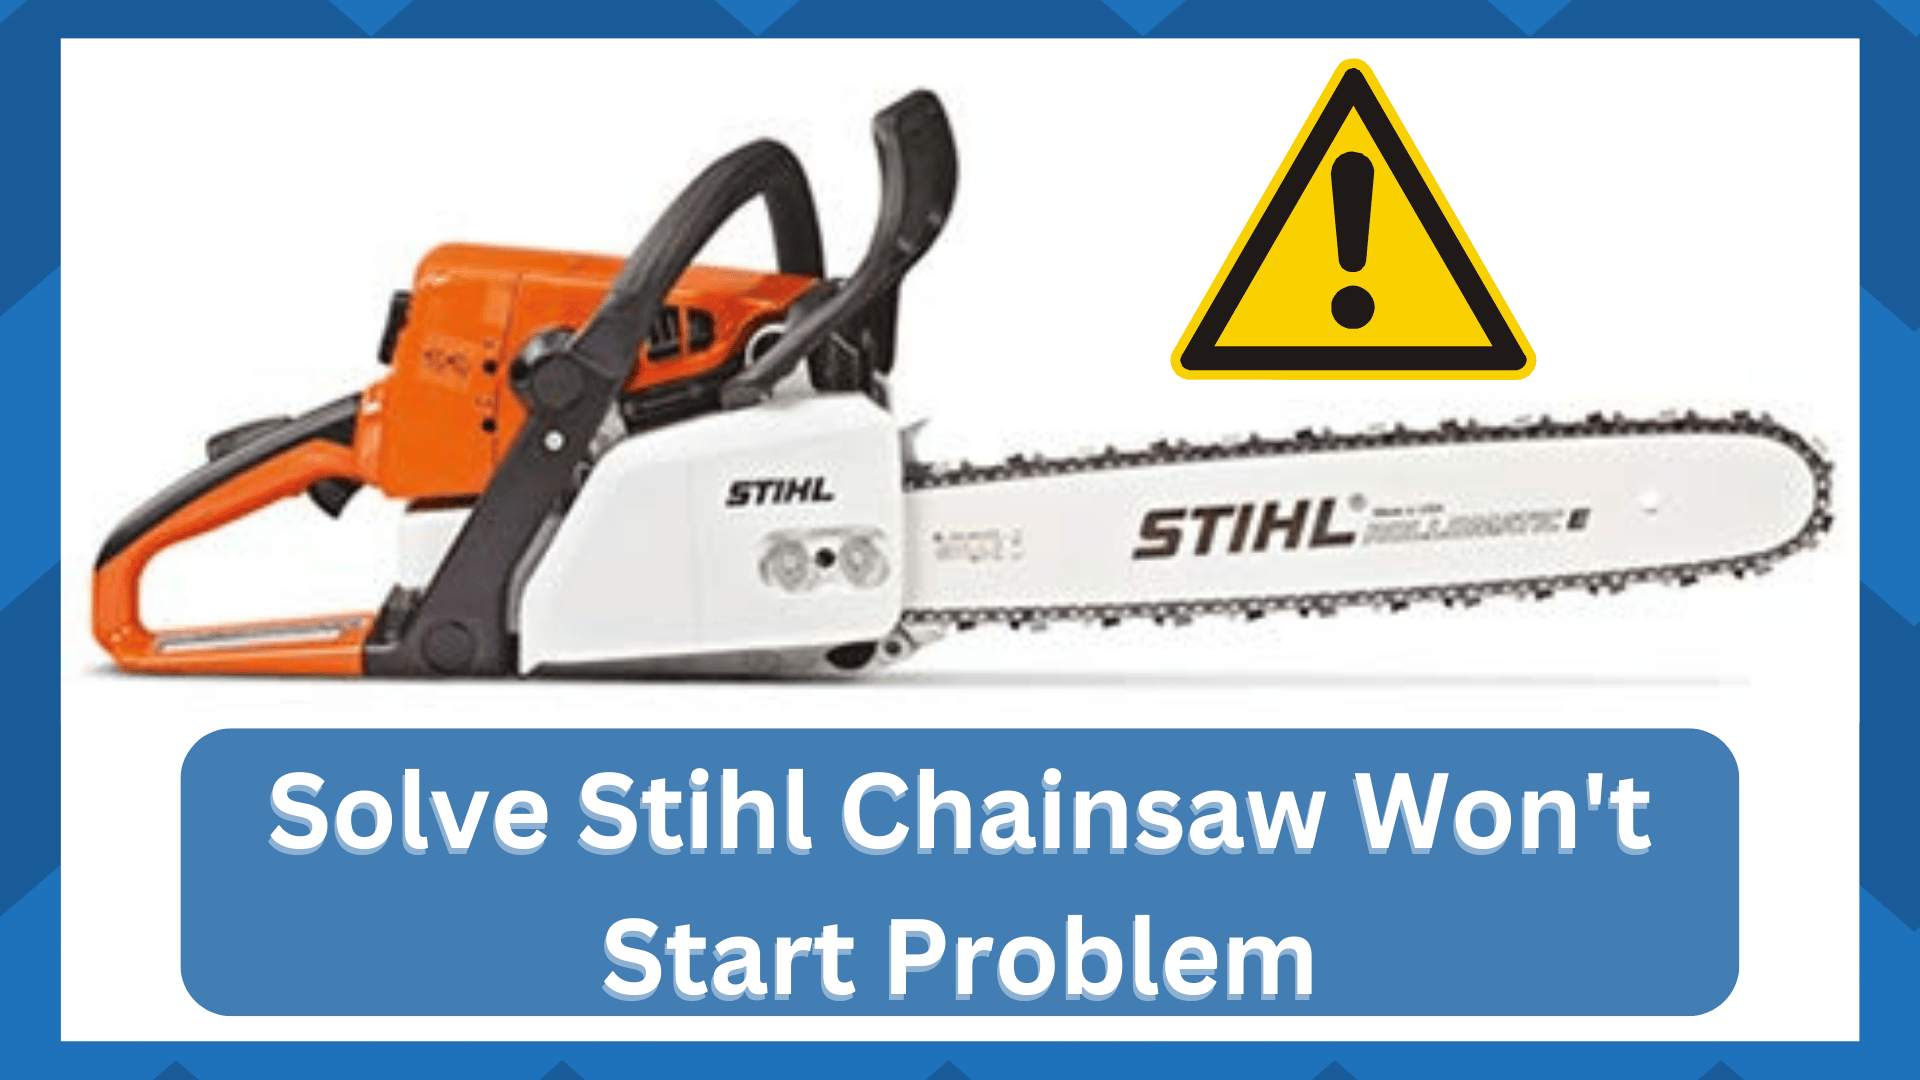 stihl chainsaw won't start